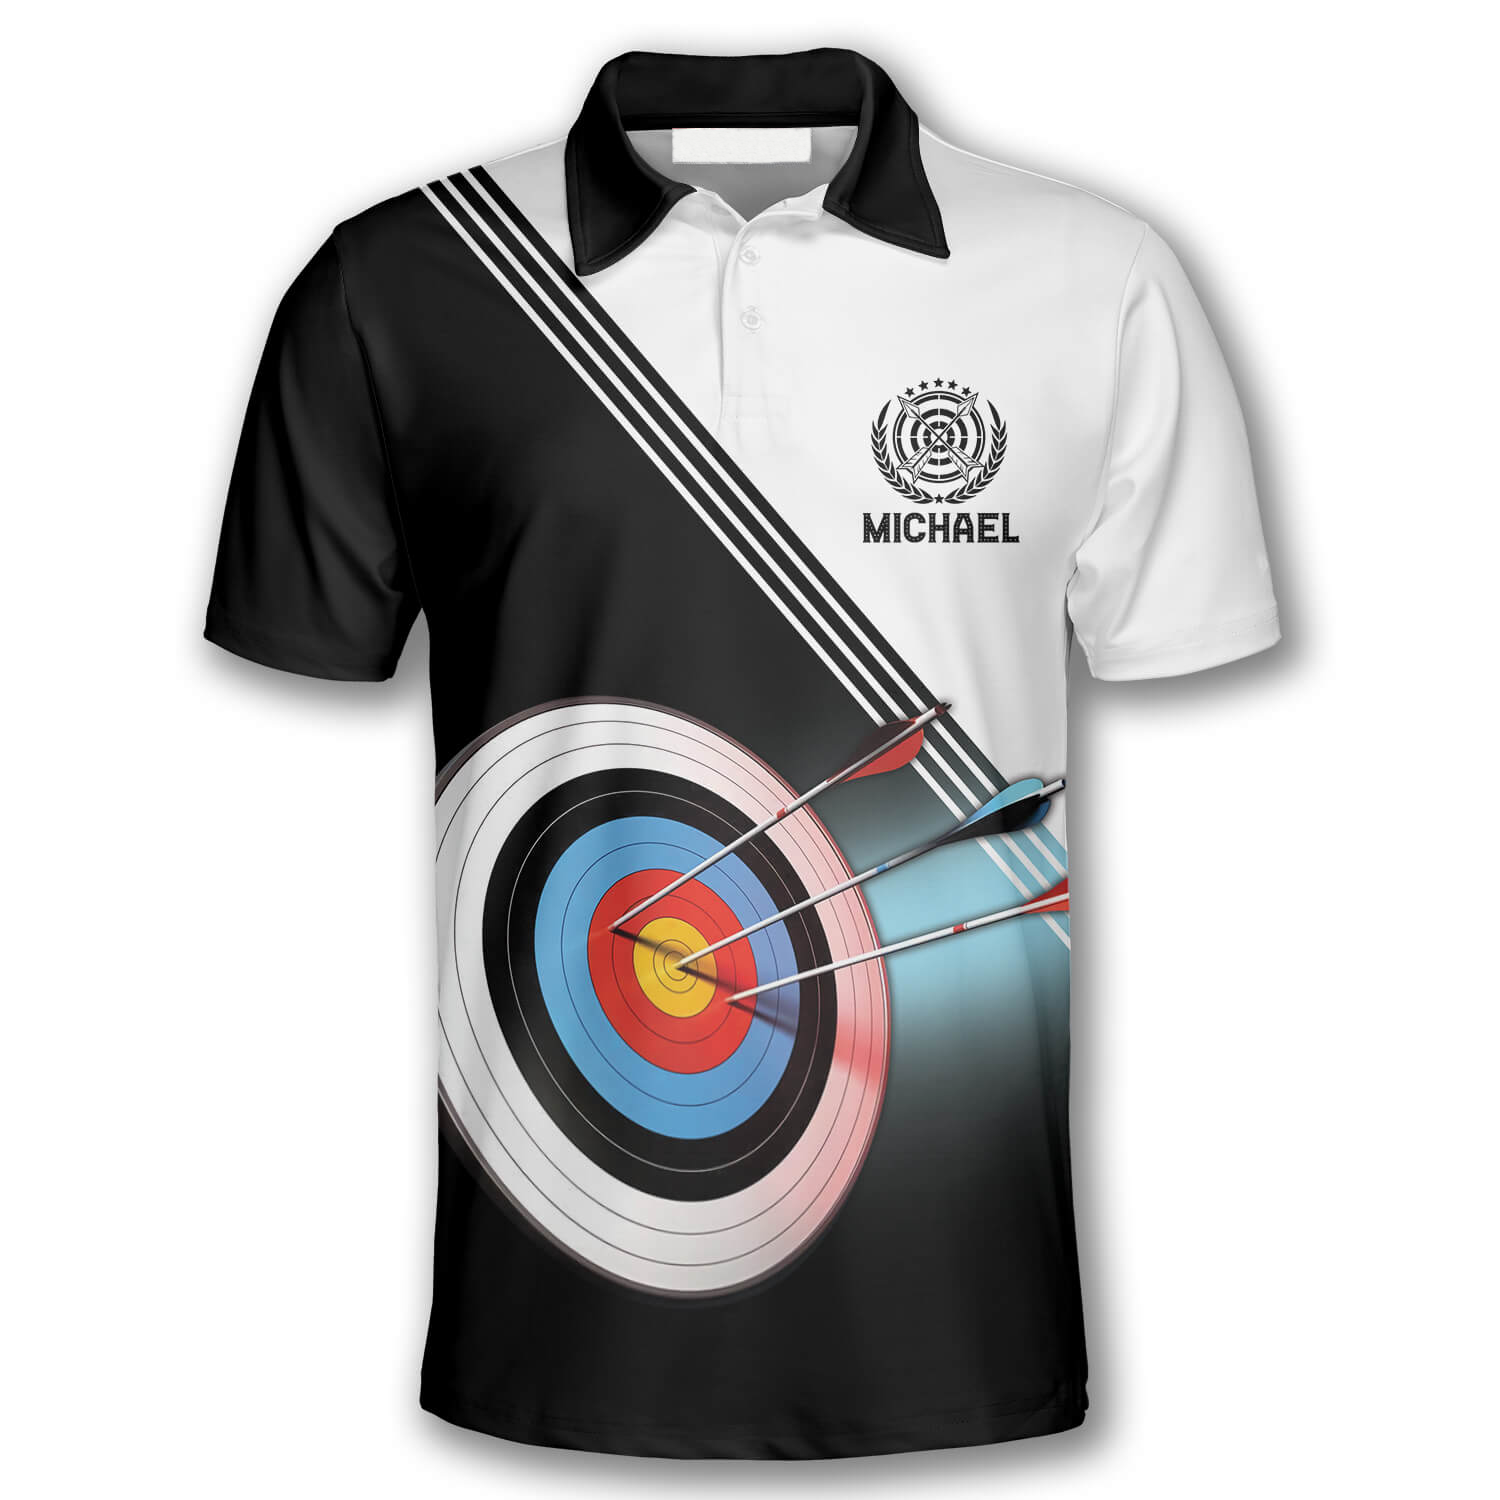 Archery Practice Makes Perfect Custom Archery Shirts For Men/ Uniform for Team Archery